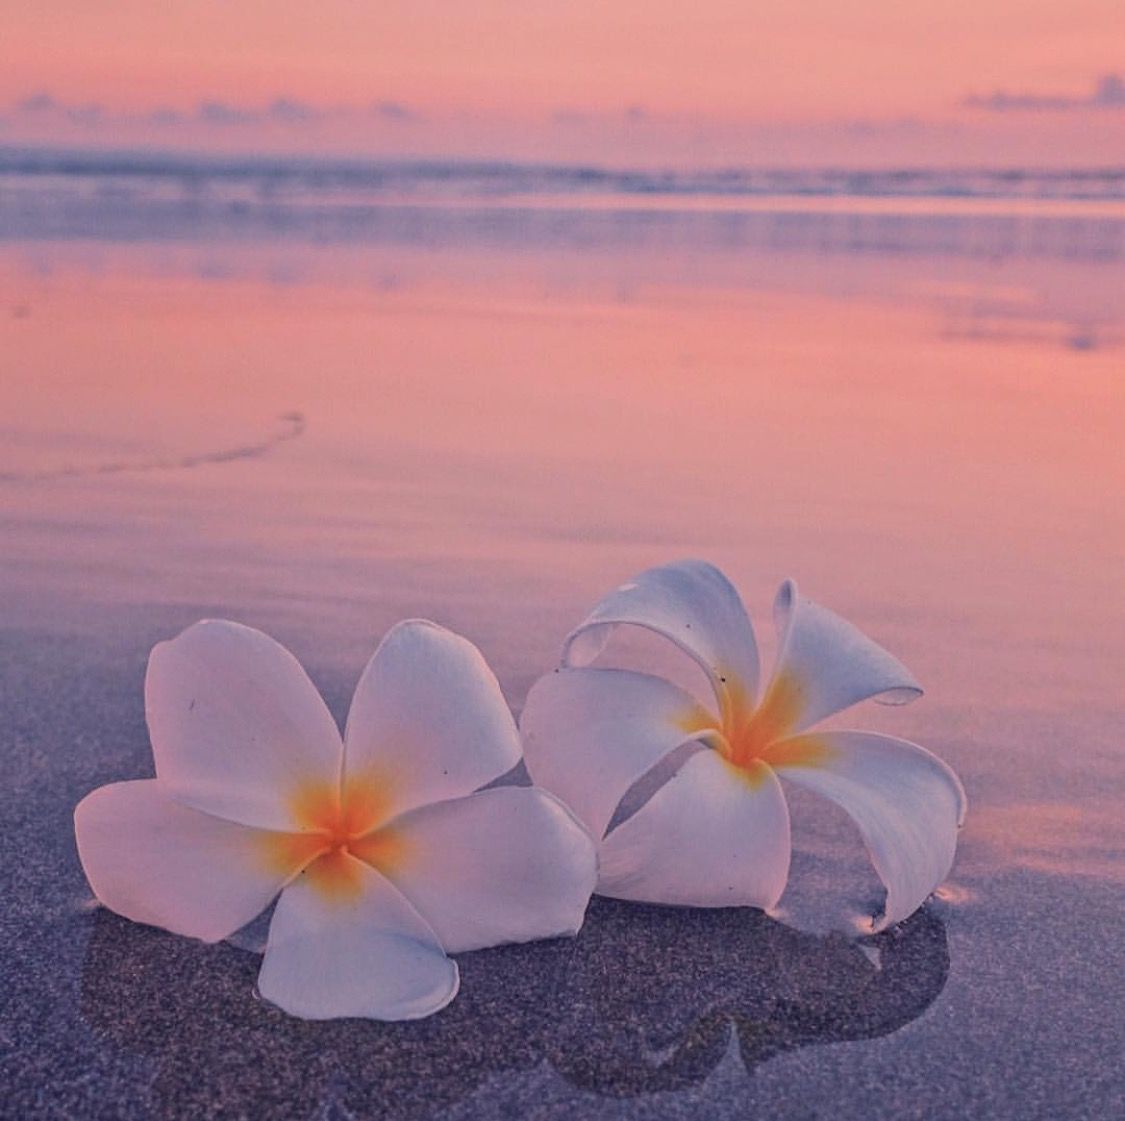 ❣ plumeria flower ocean sea beach sunrise sunset. Beach wallpaper, Summer wallpaper, Plumeria